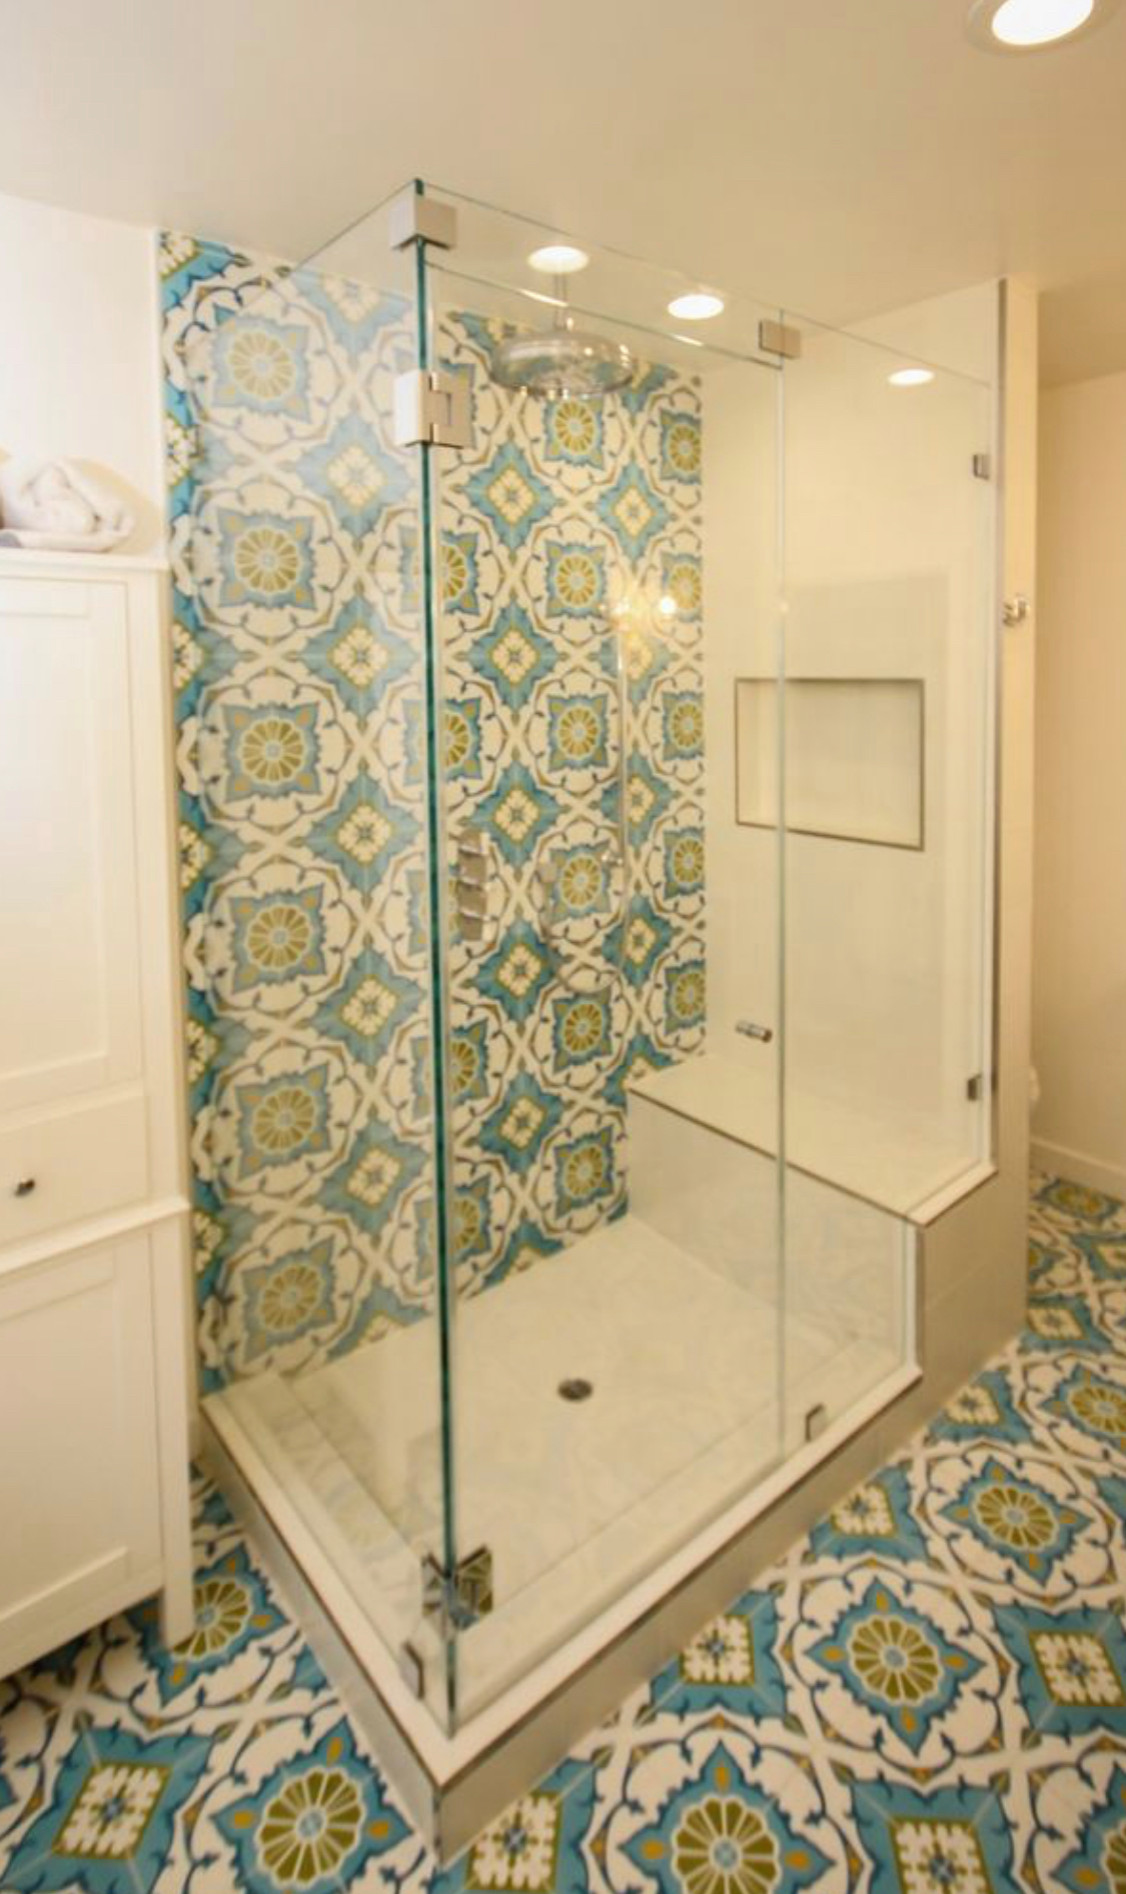 Bathroom remodeling in Malibu